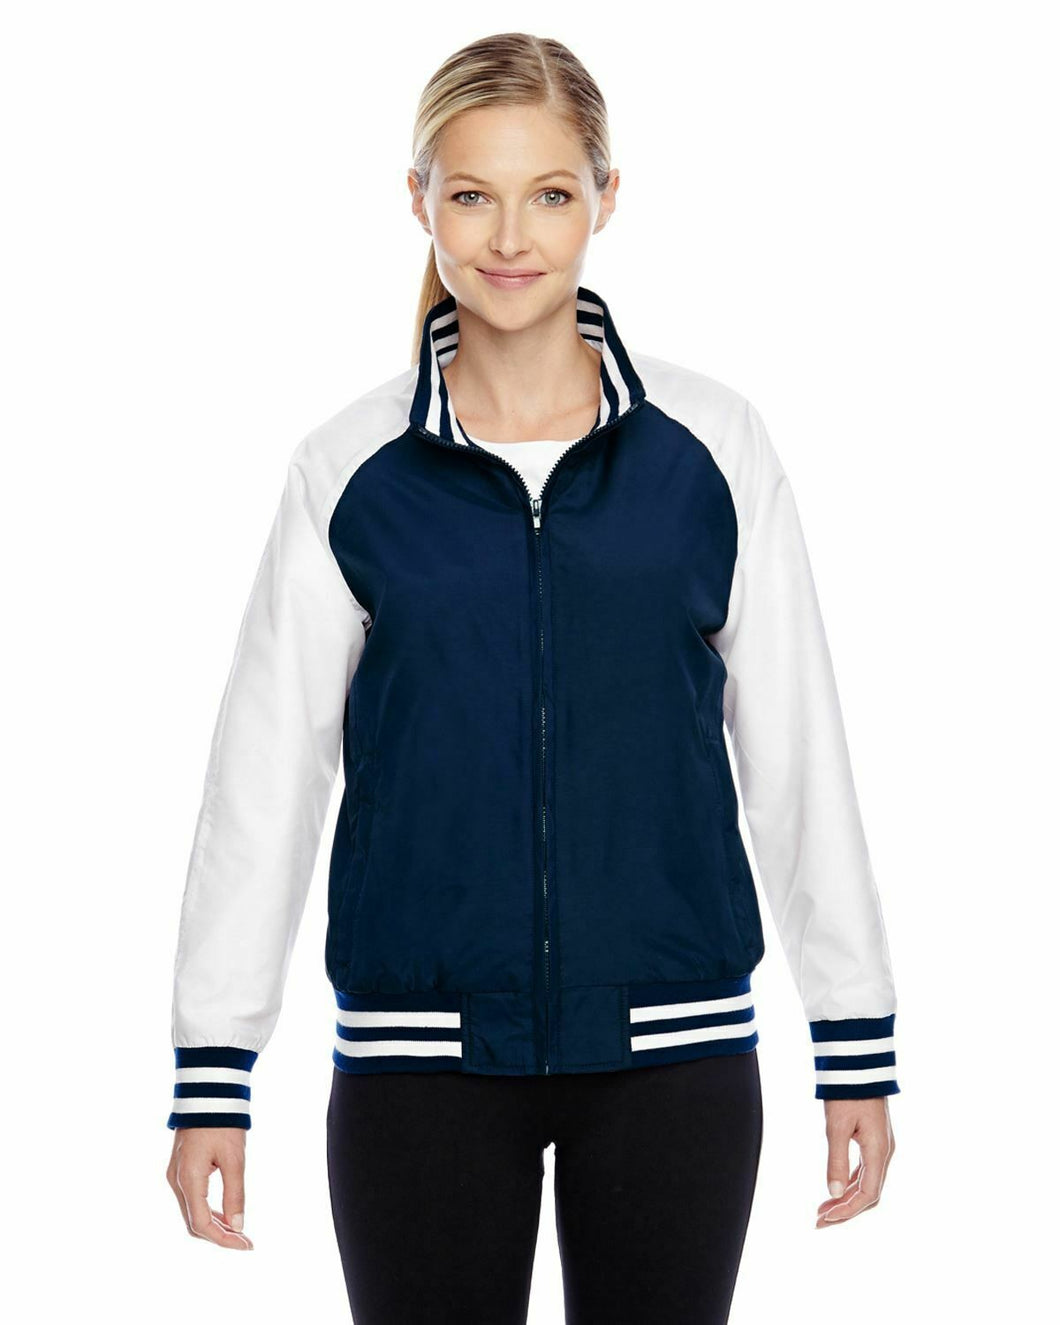 Team 365 Retro Style Ladies Championship Jacket, Dark Navy & White, 3XL - New